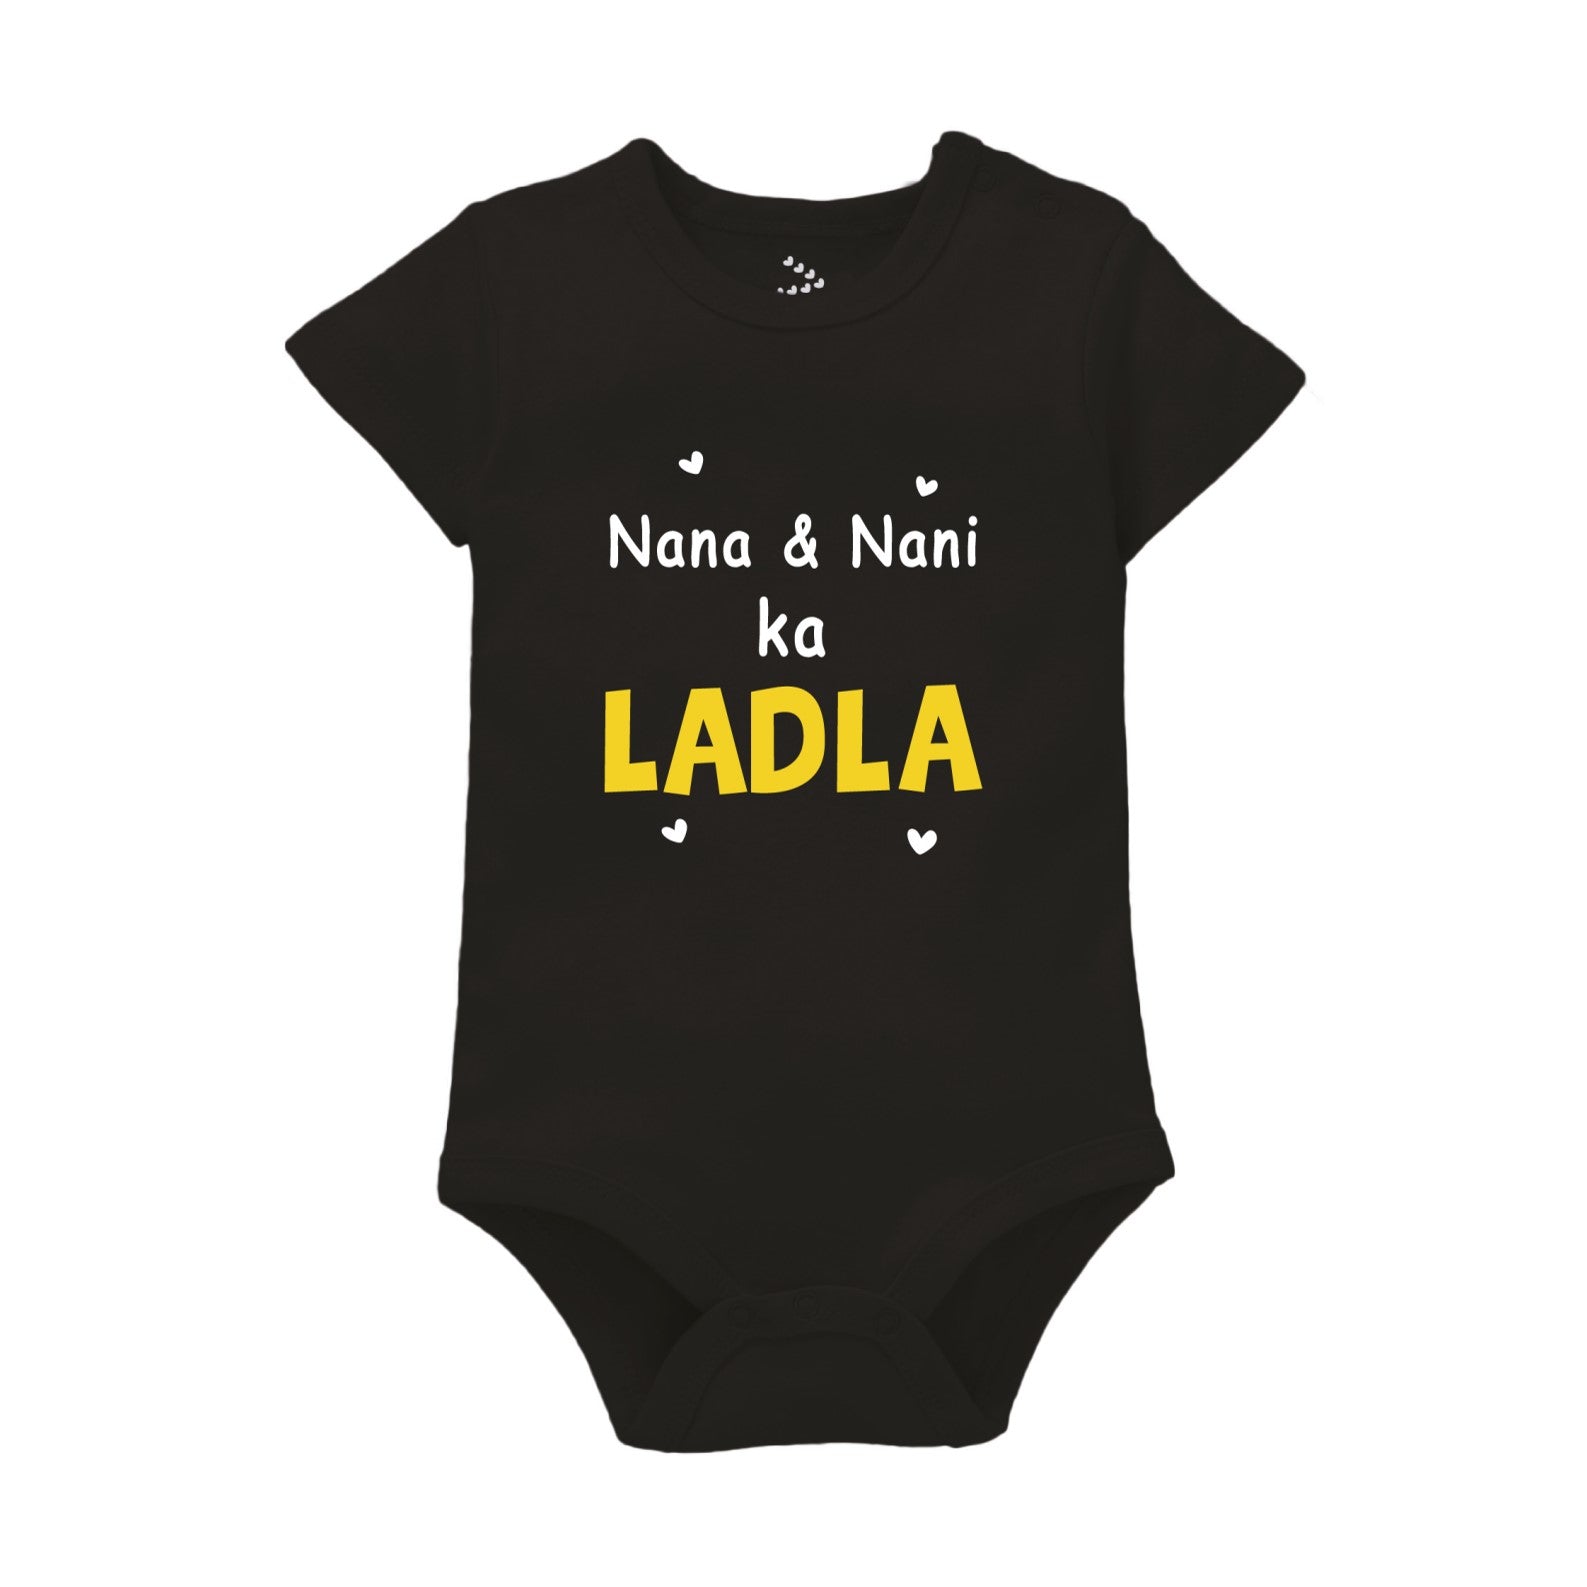 Nana & Nani's Ladla Printed Baby Onesie - Black